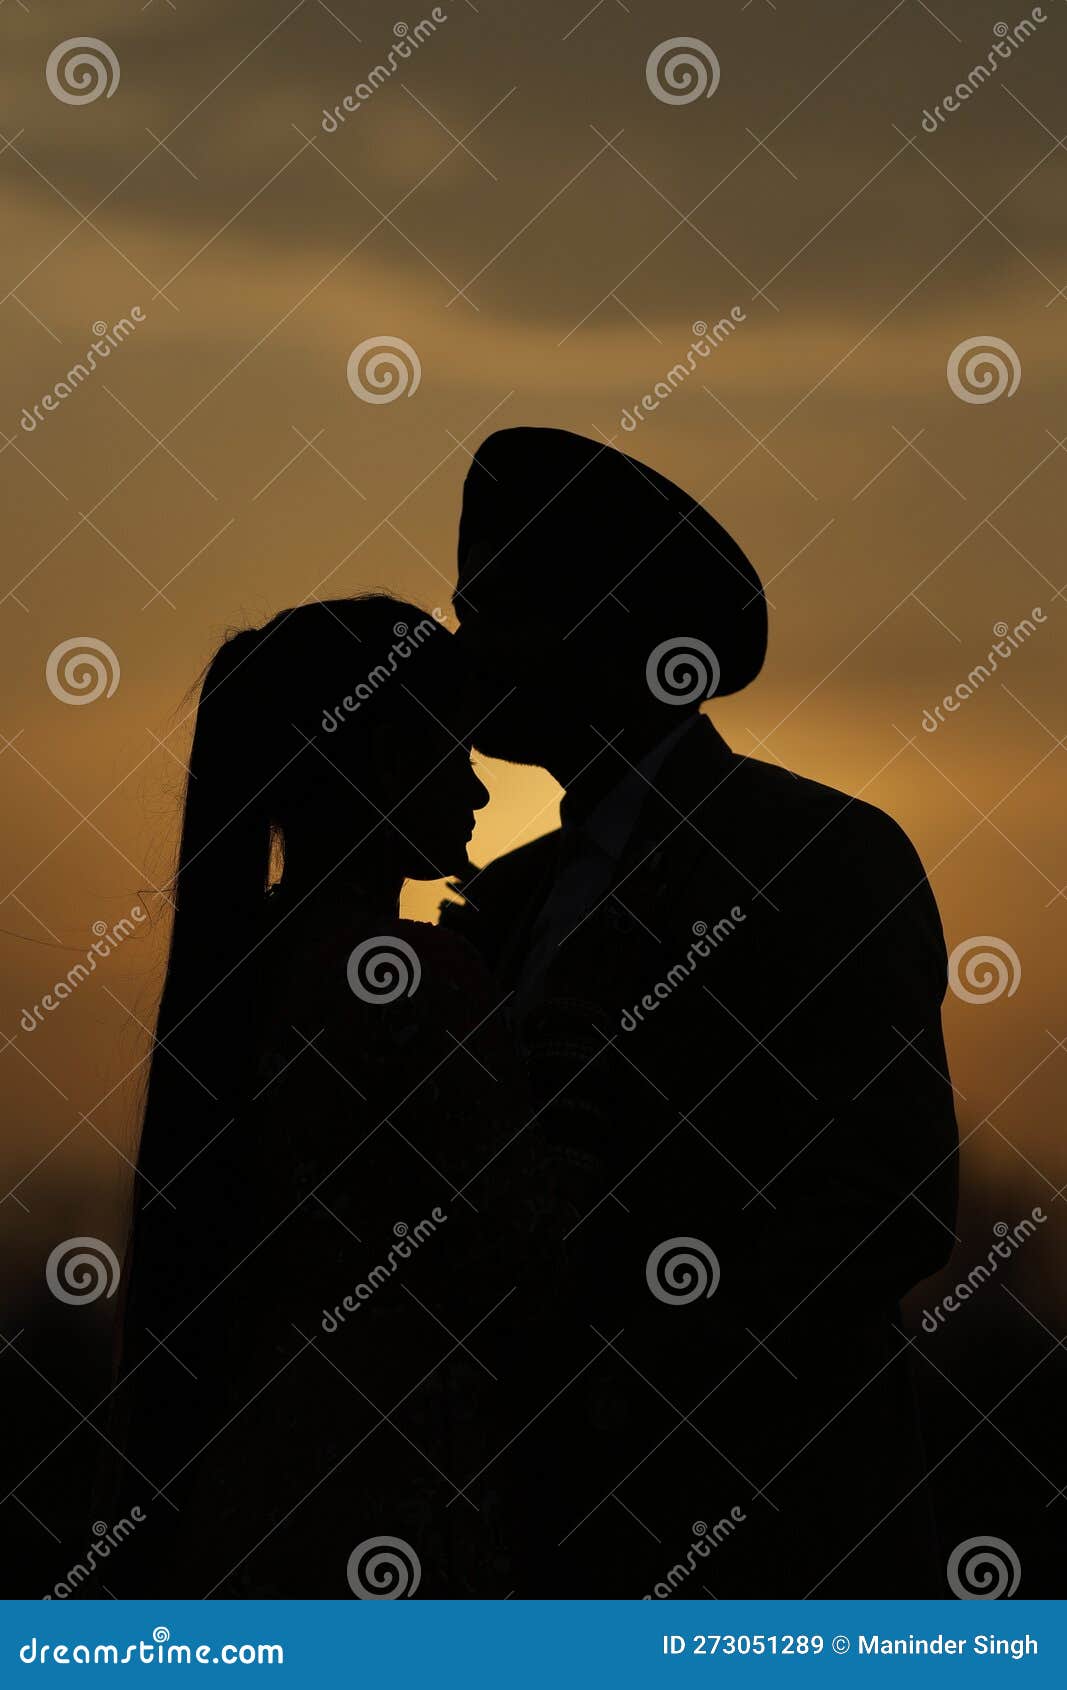 male kissing female on forehead.